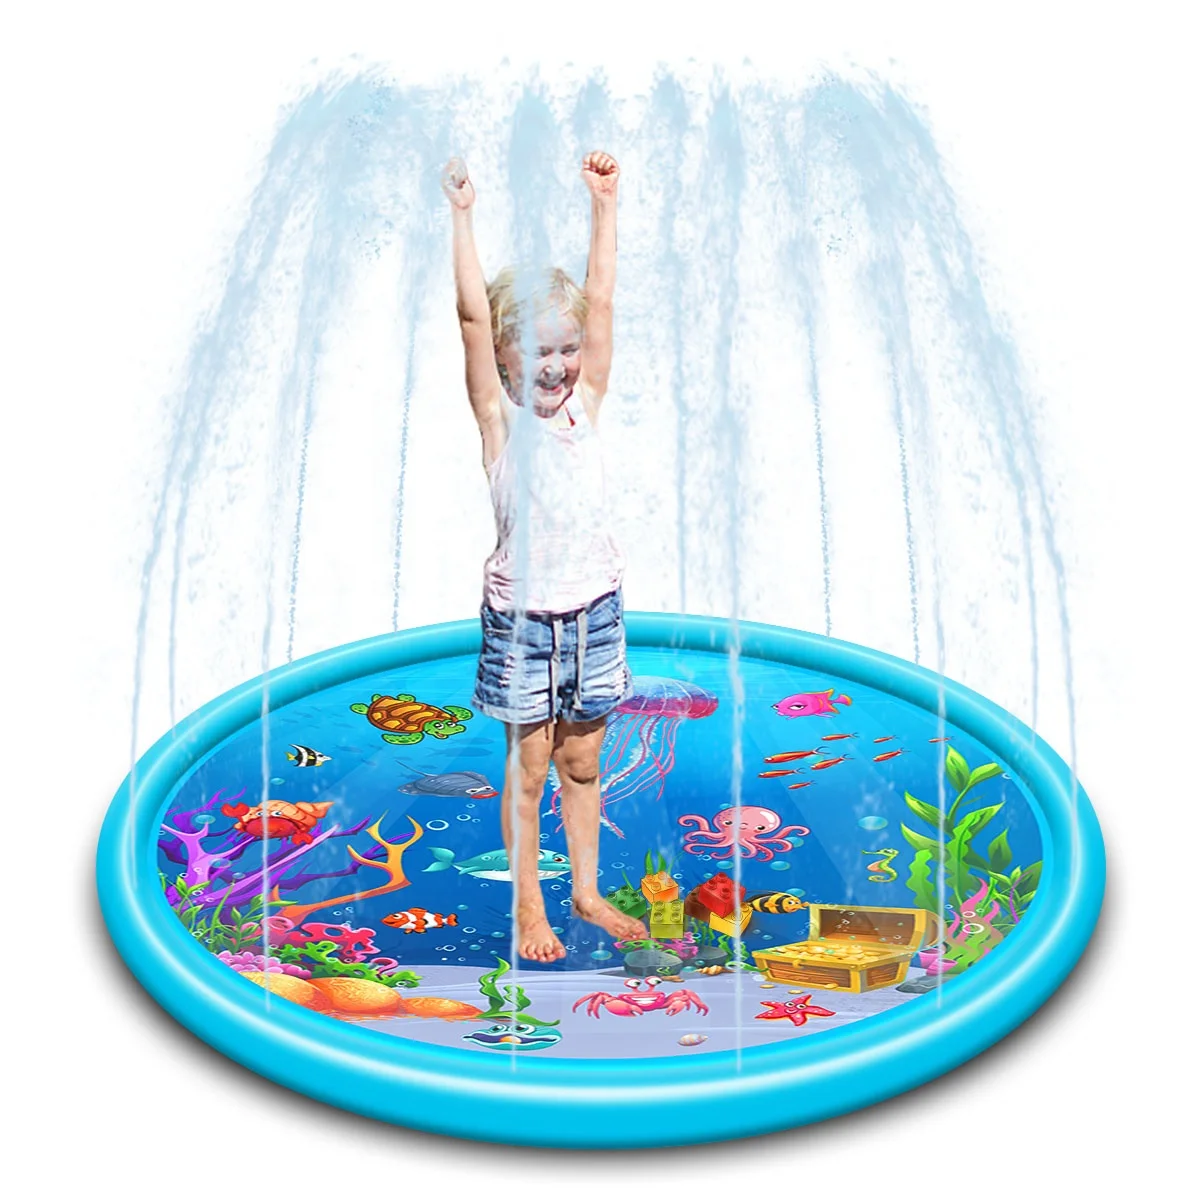 

Outdoor Backyard Lawn Games Infant Wading Pool 68" Splash Pad Water Toy Sprinkler Mat for Kids Toddlers, Blue